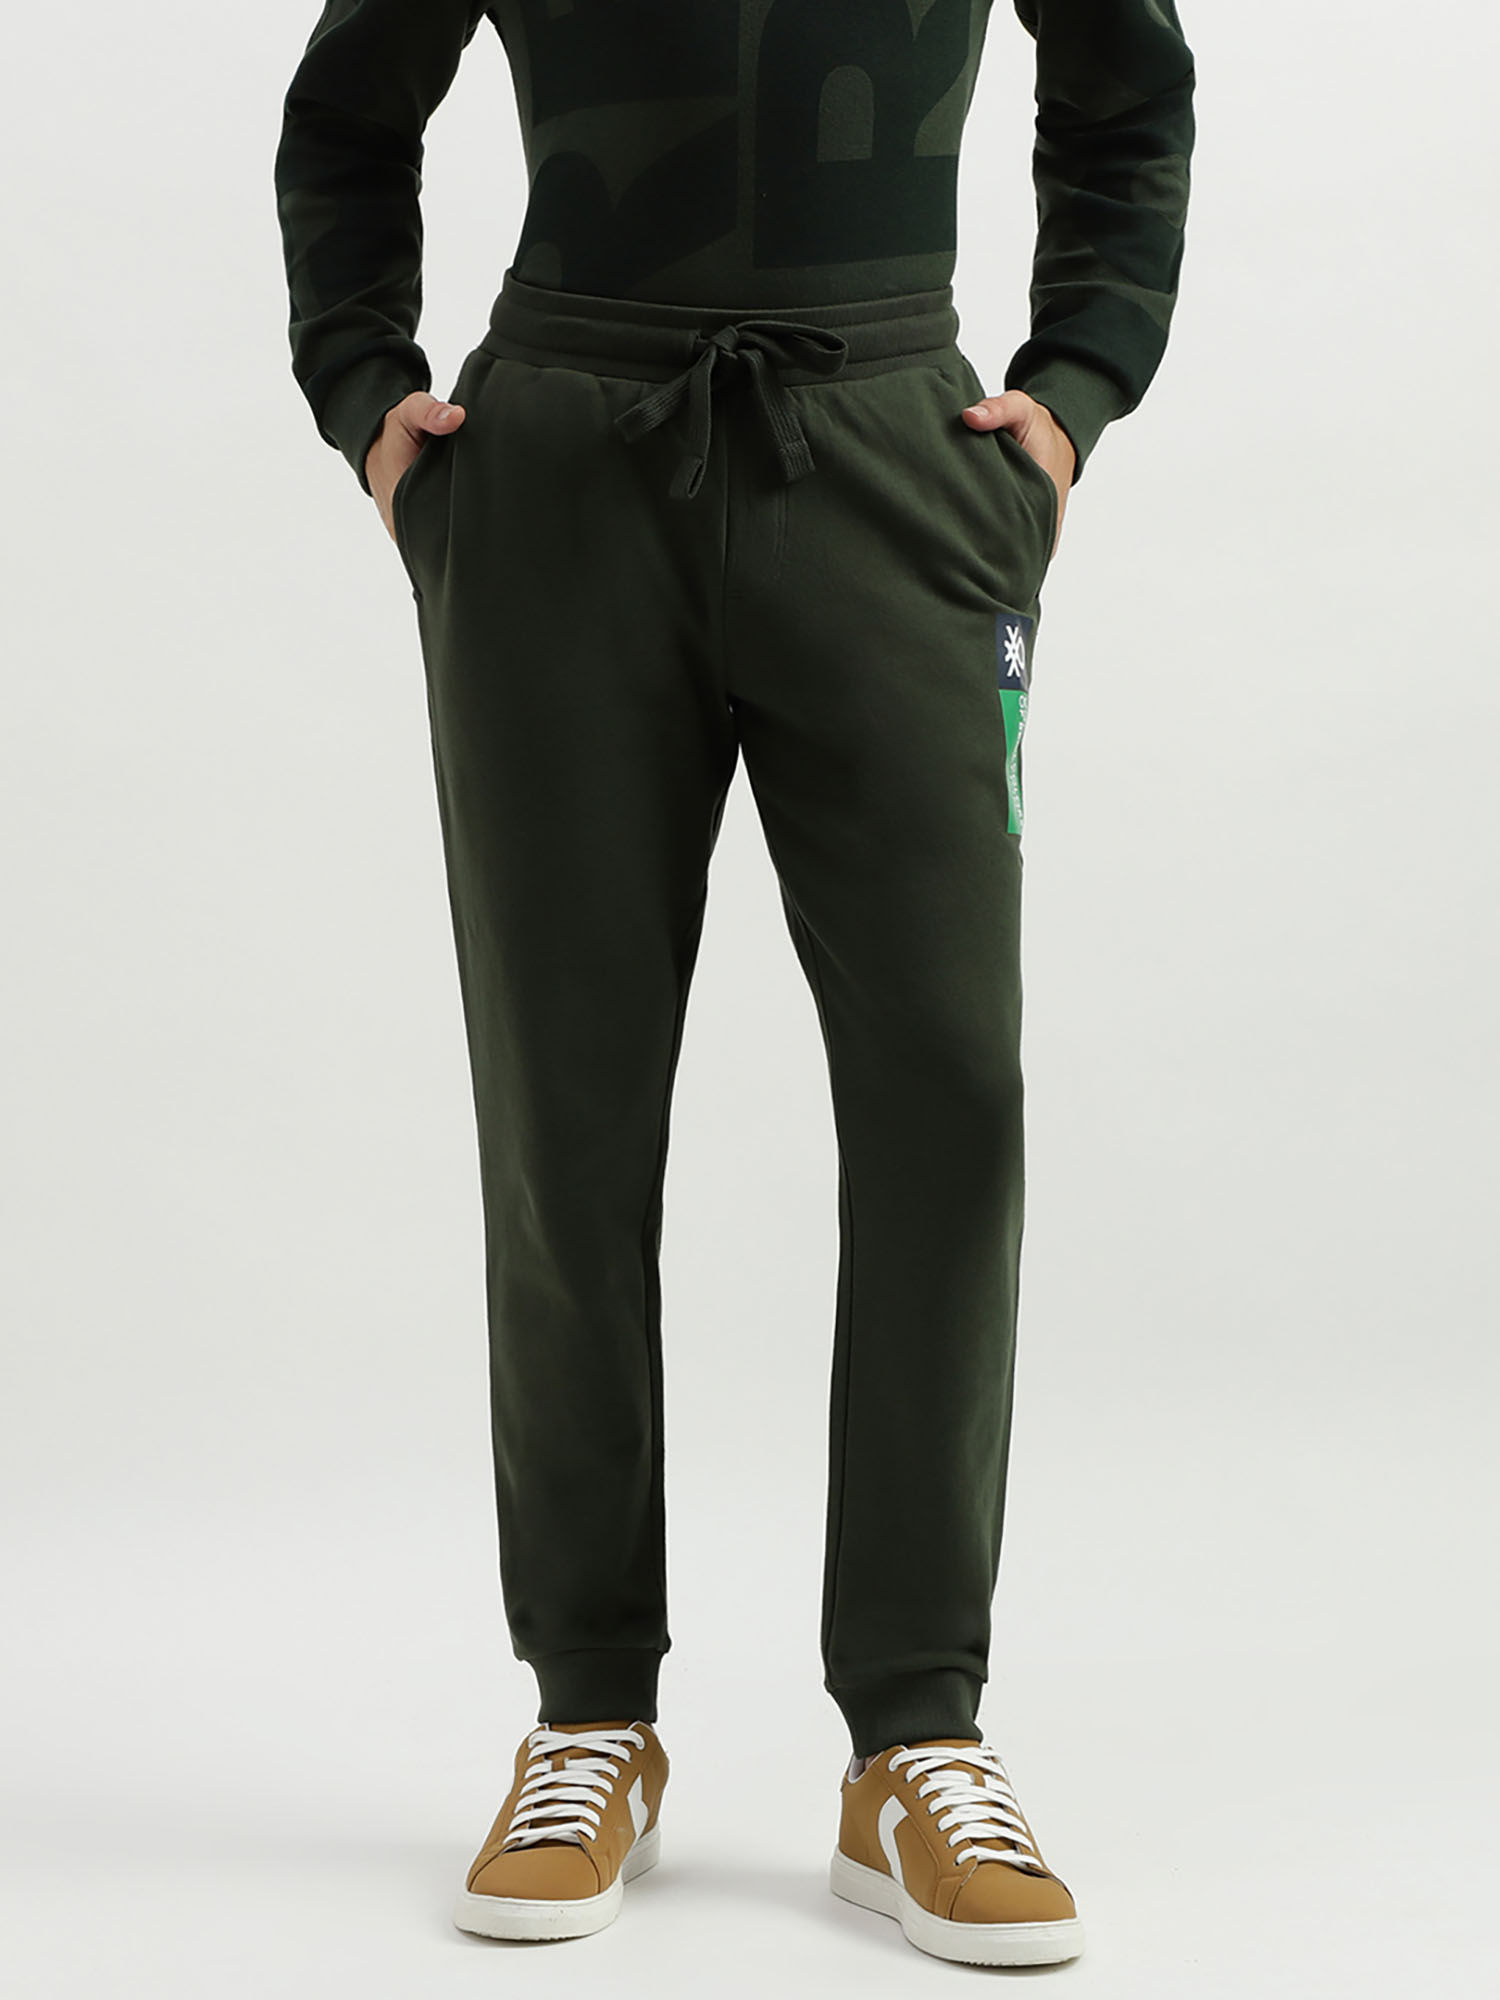 United Colors of Benetton Linen Pants Trousers Italian Size 42 | eBay